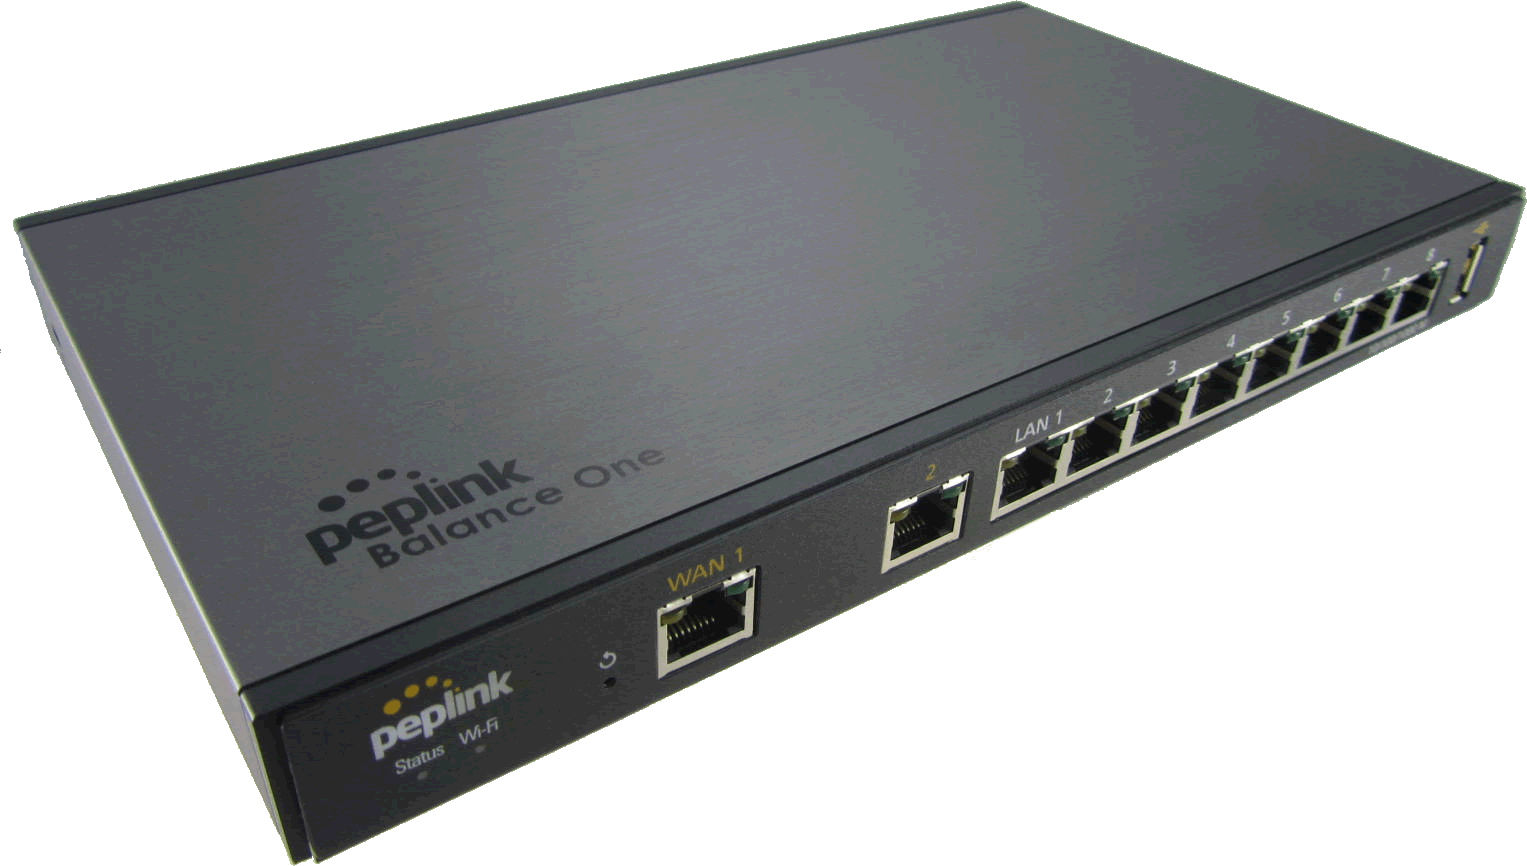   Routeurs 4G LTE Multiwan SdWan Firewall  450Mb Balance OneCore : routeur firewall 5 WAN, 450Mb, 50 users